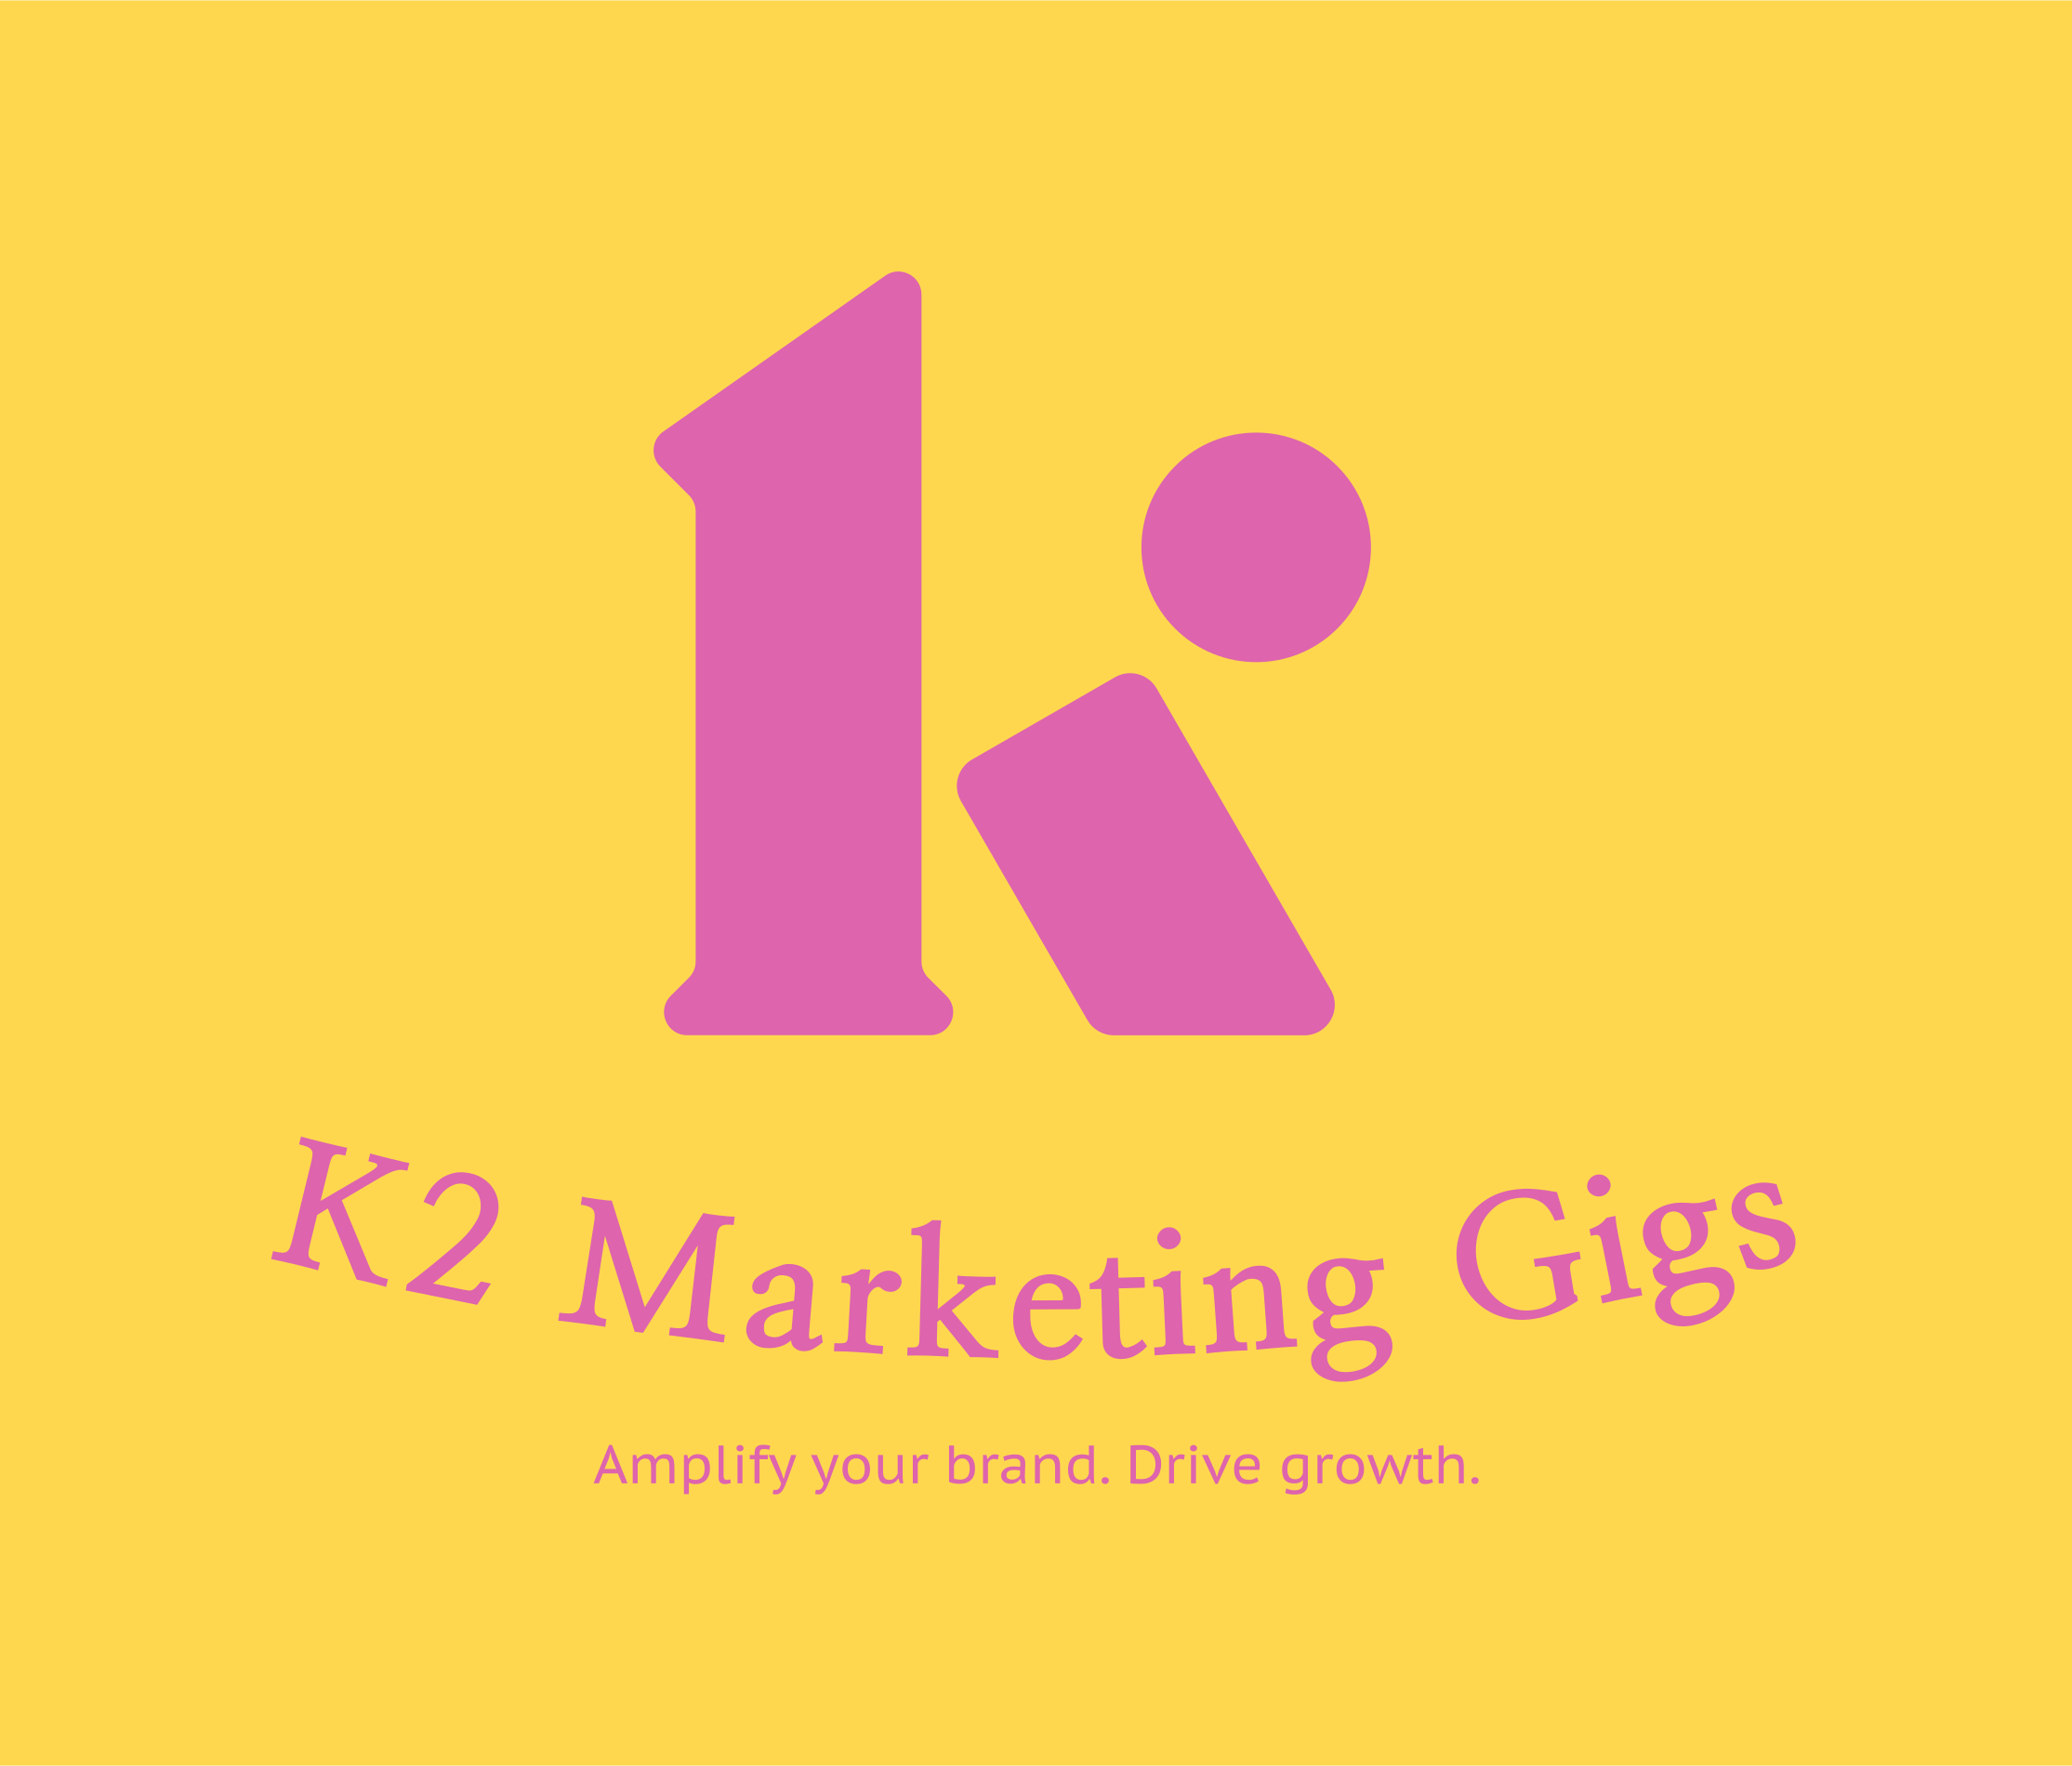 K2 Marketing Gigs